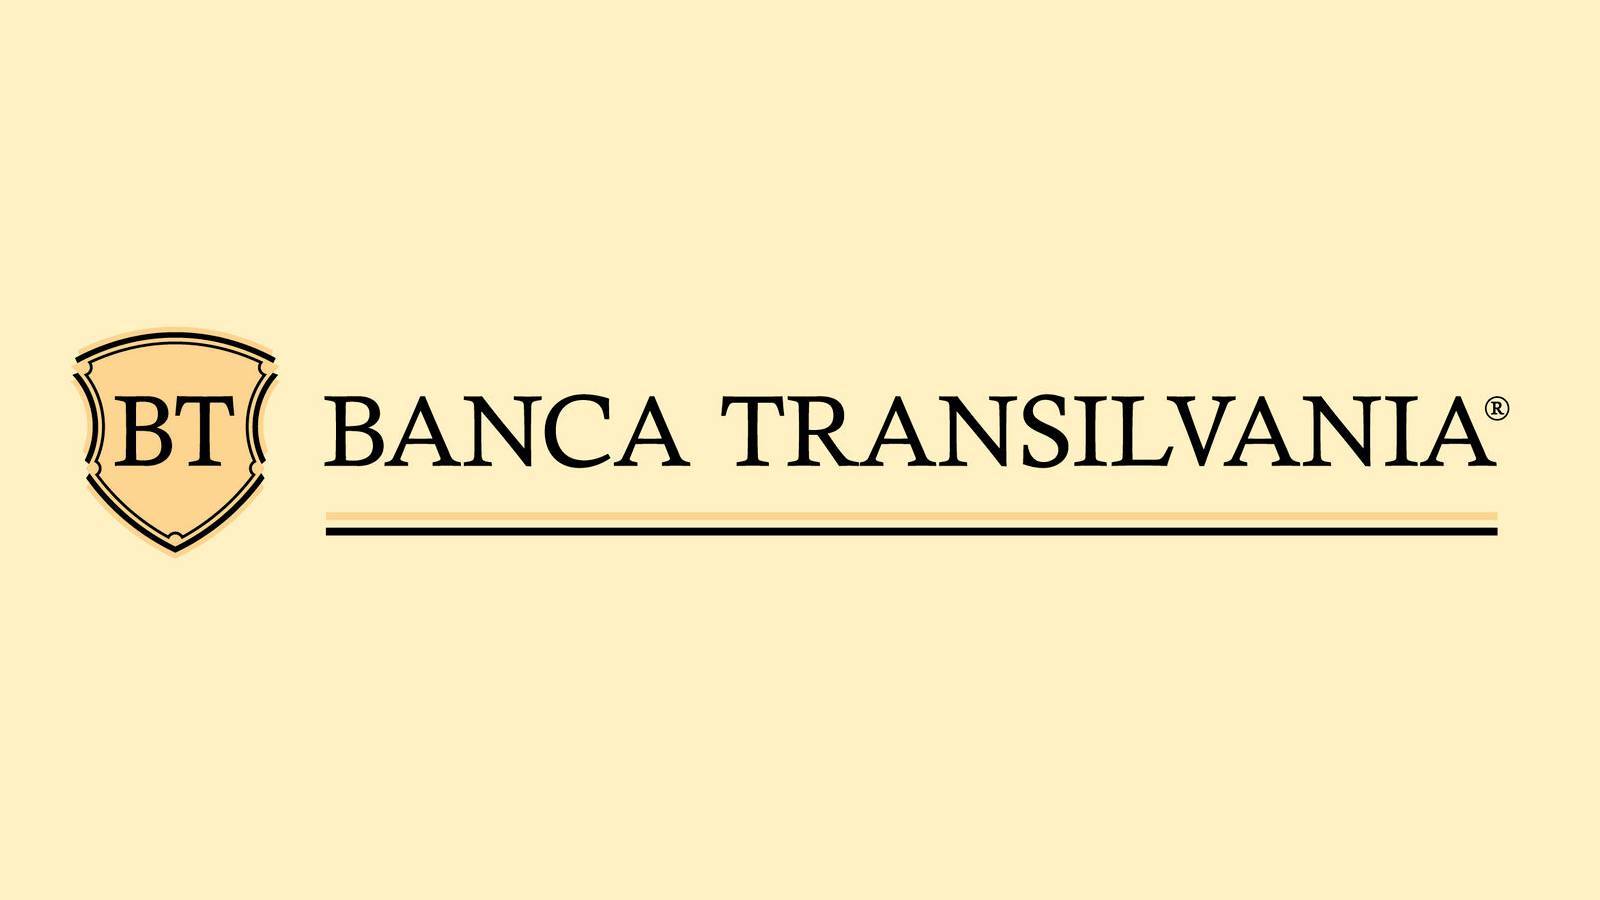 Revisión de BANCA Transilvania